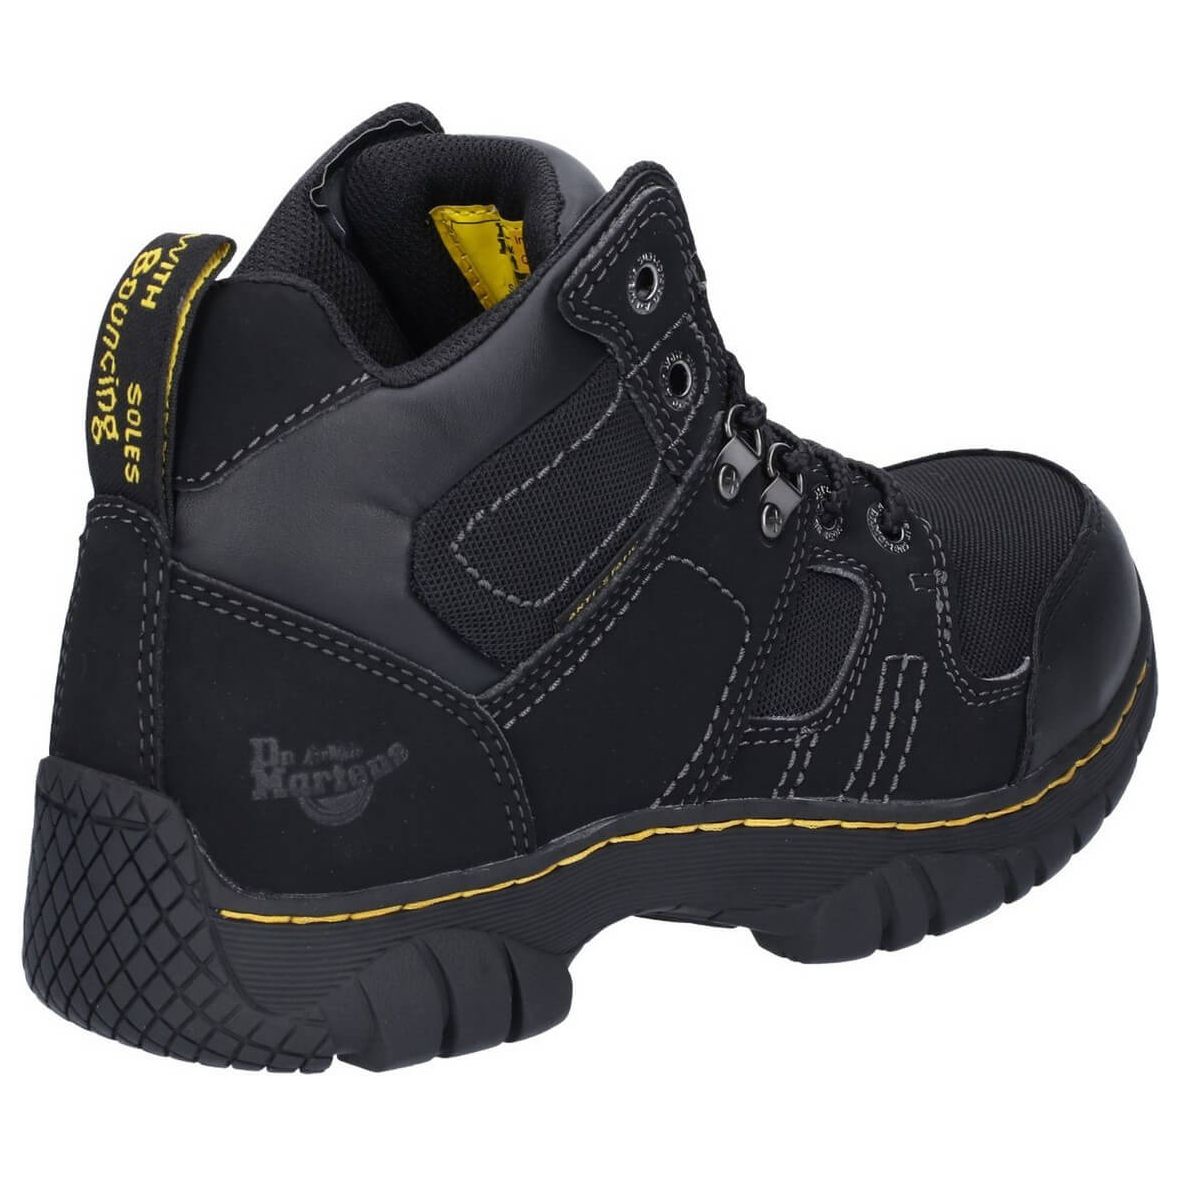 Dr Martens Benham Safety Boots-Black-2